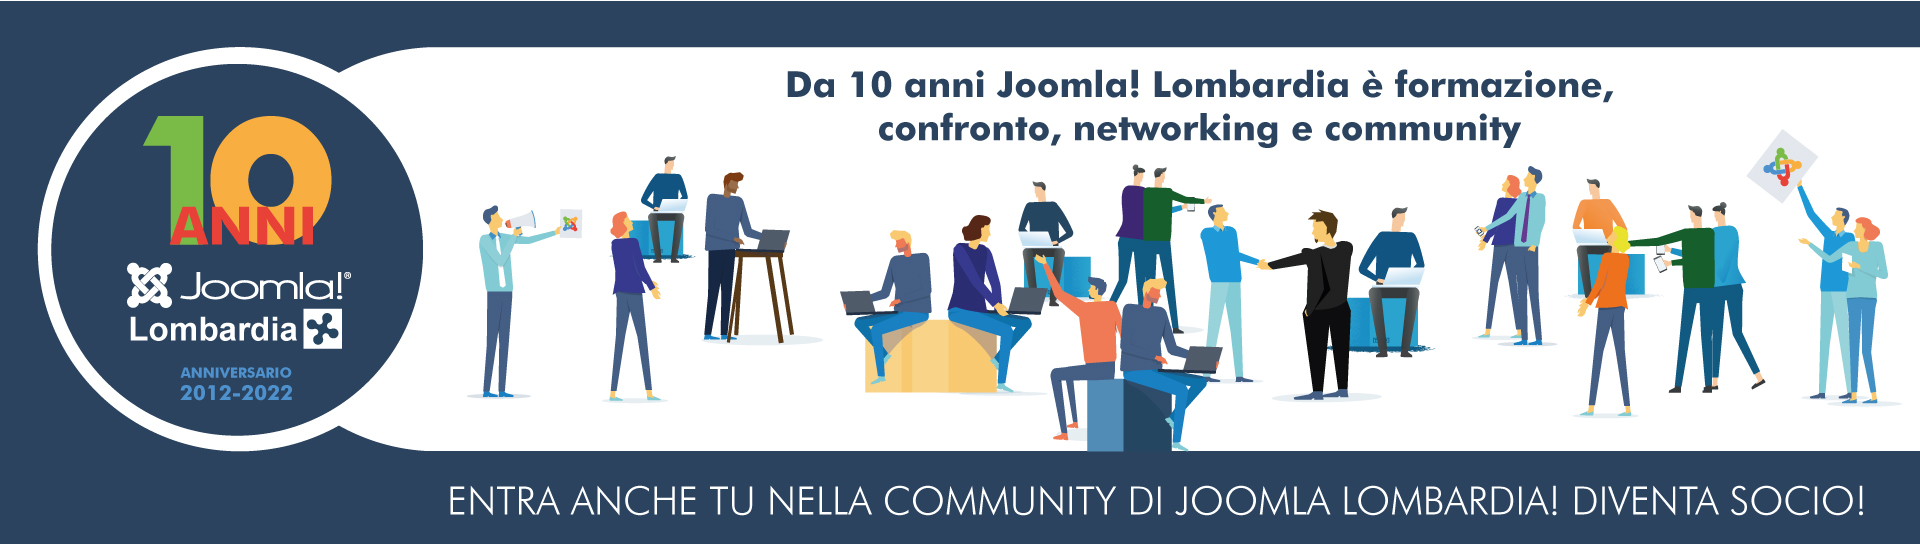 10 anni di Joomla! Lombardia